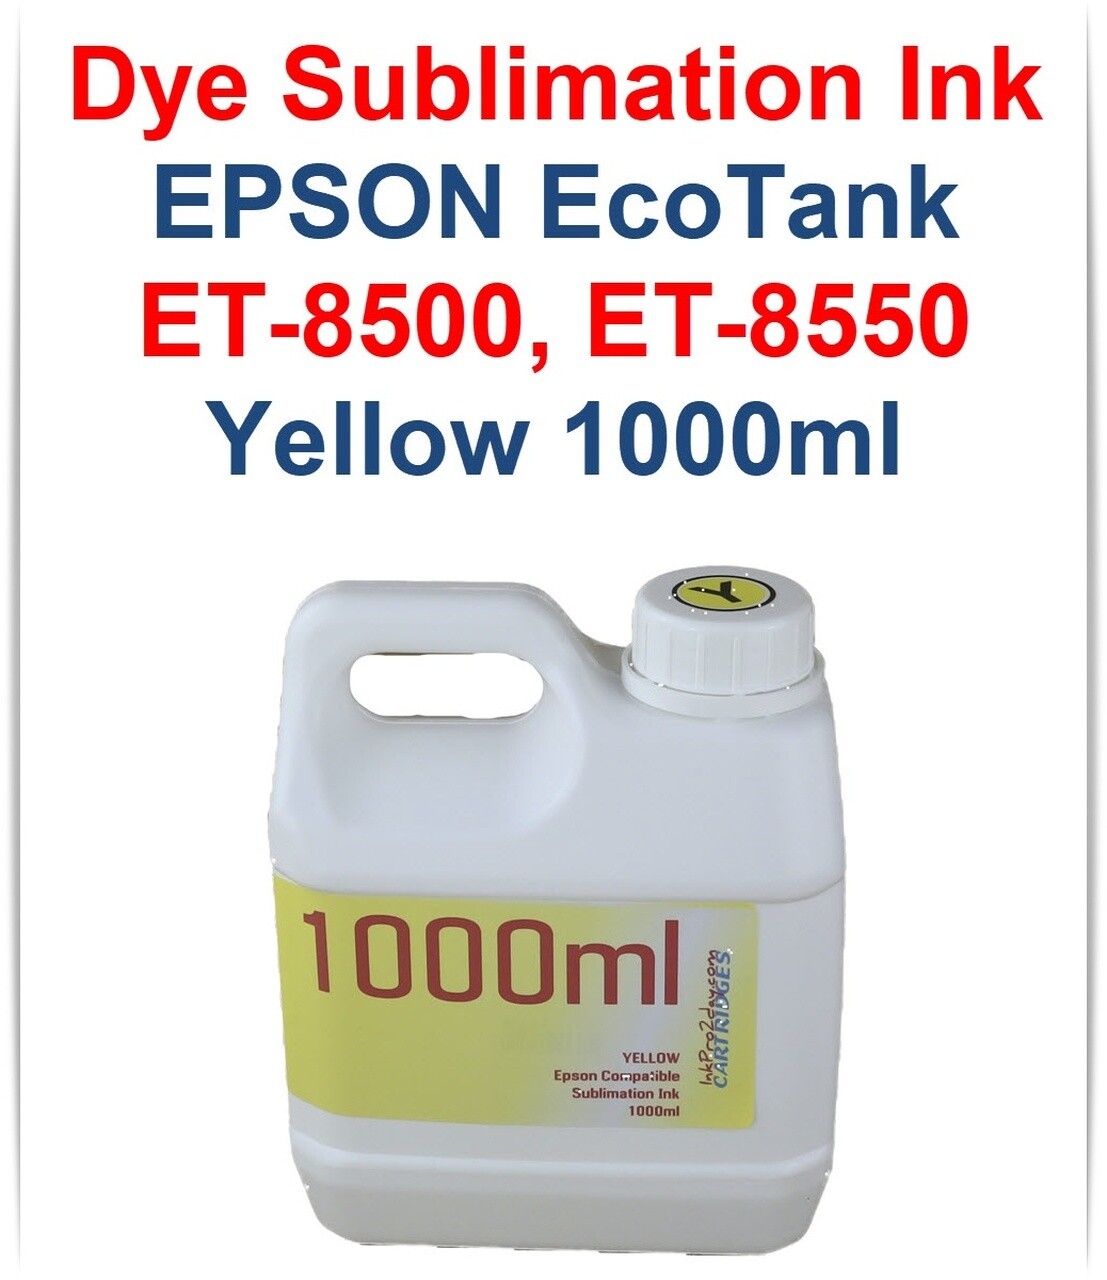 Yellow Dye Sublimation Ink 1000ml bottle for EPSON EcoTank ET-8500 ET-8550 printers